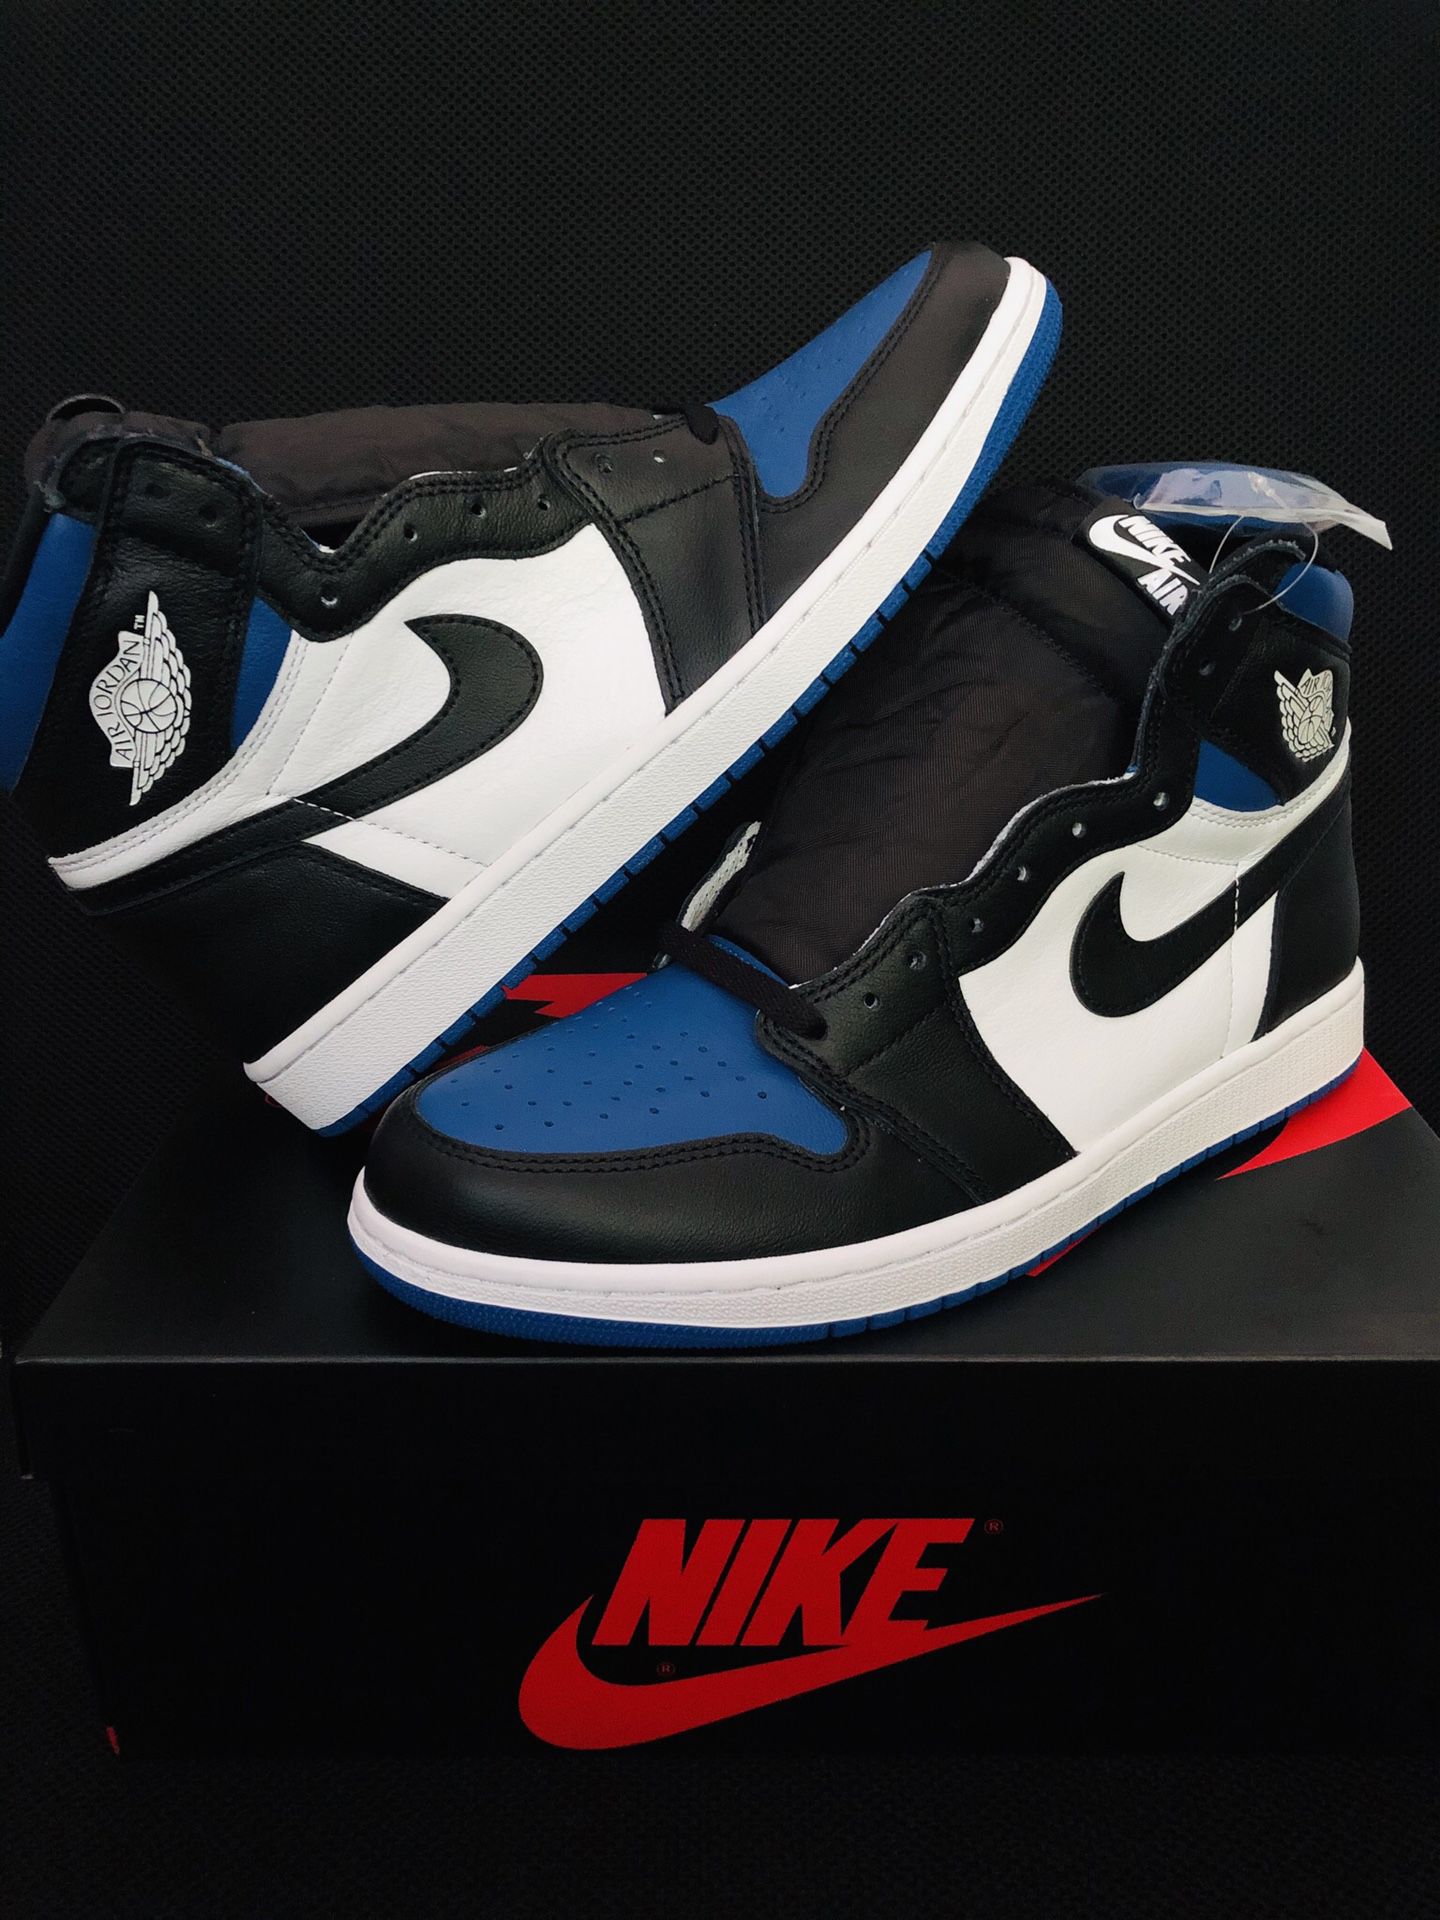 Nike Jordan 1 Retro High OG “Royal Toe”